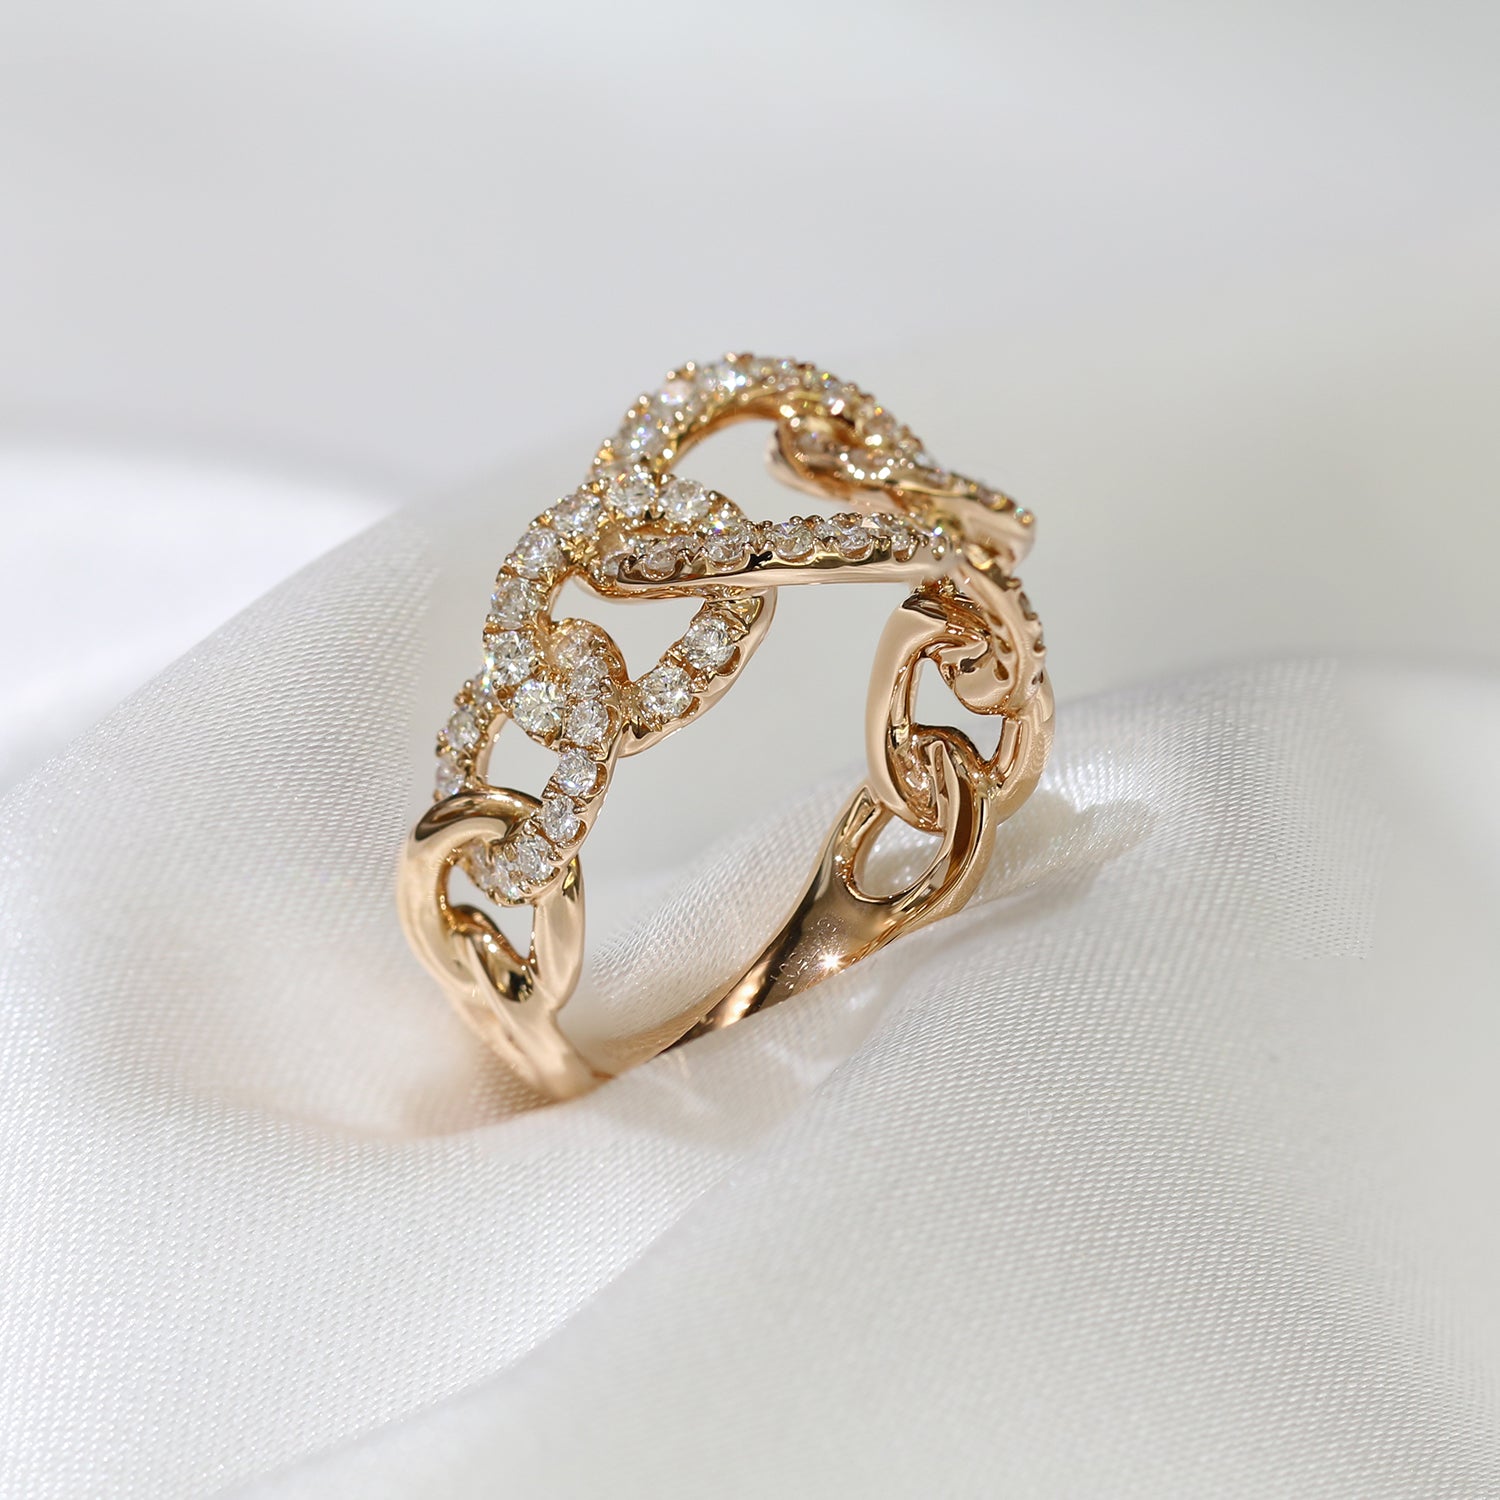 18k玫瑰金鑽石戒指側面  18k Rose Gold Chain Diamond Ring on side view